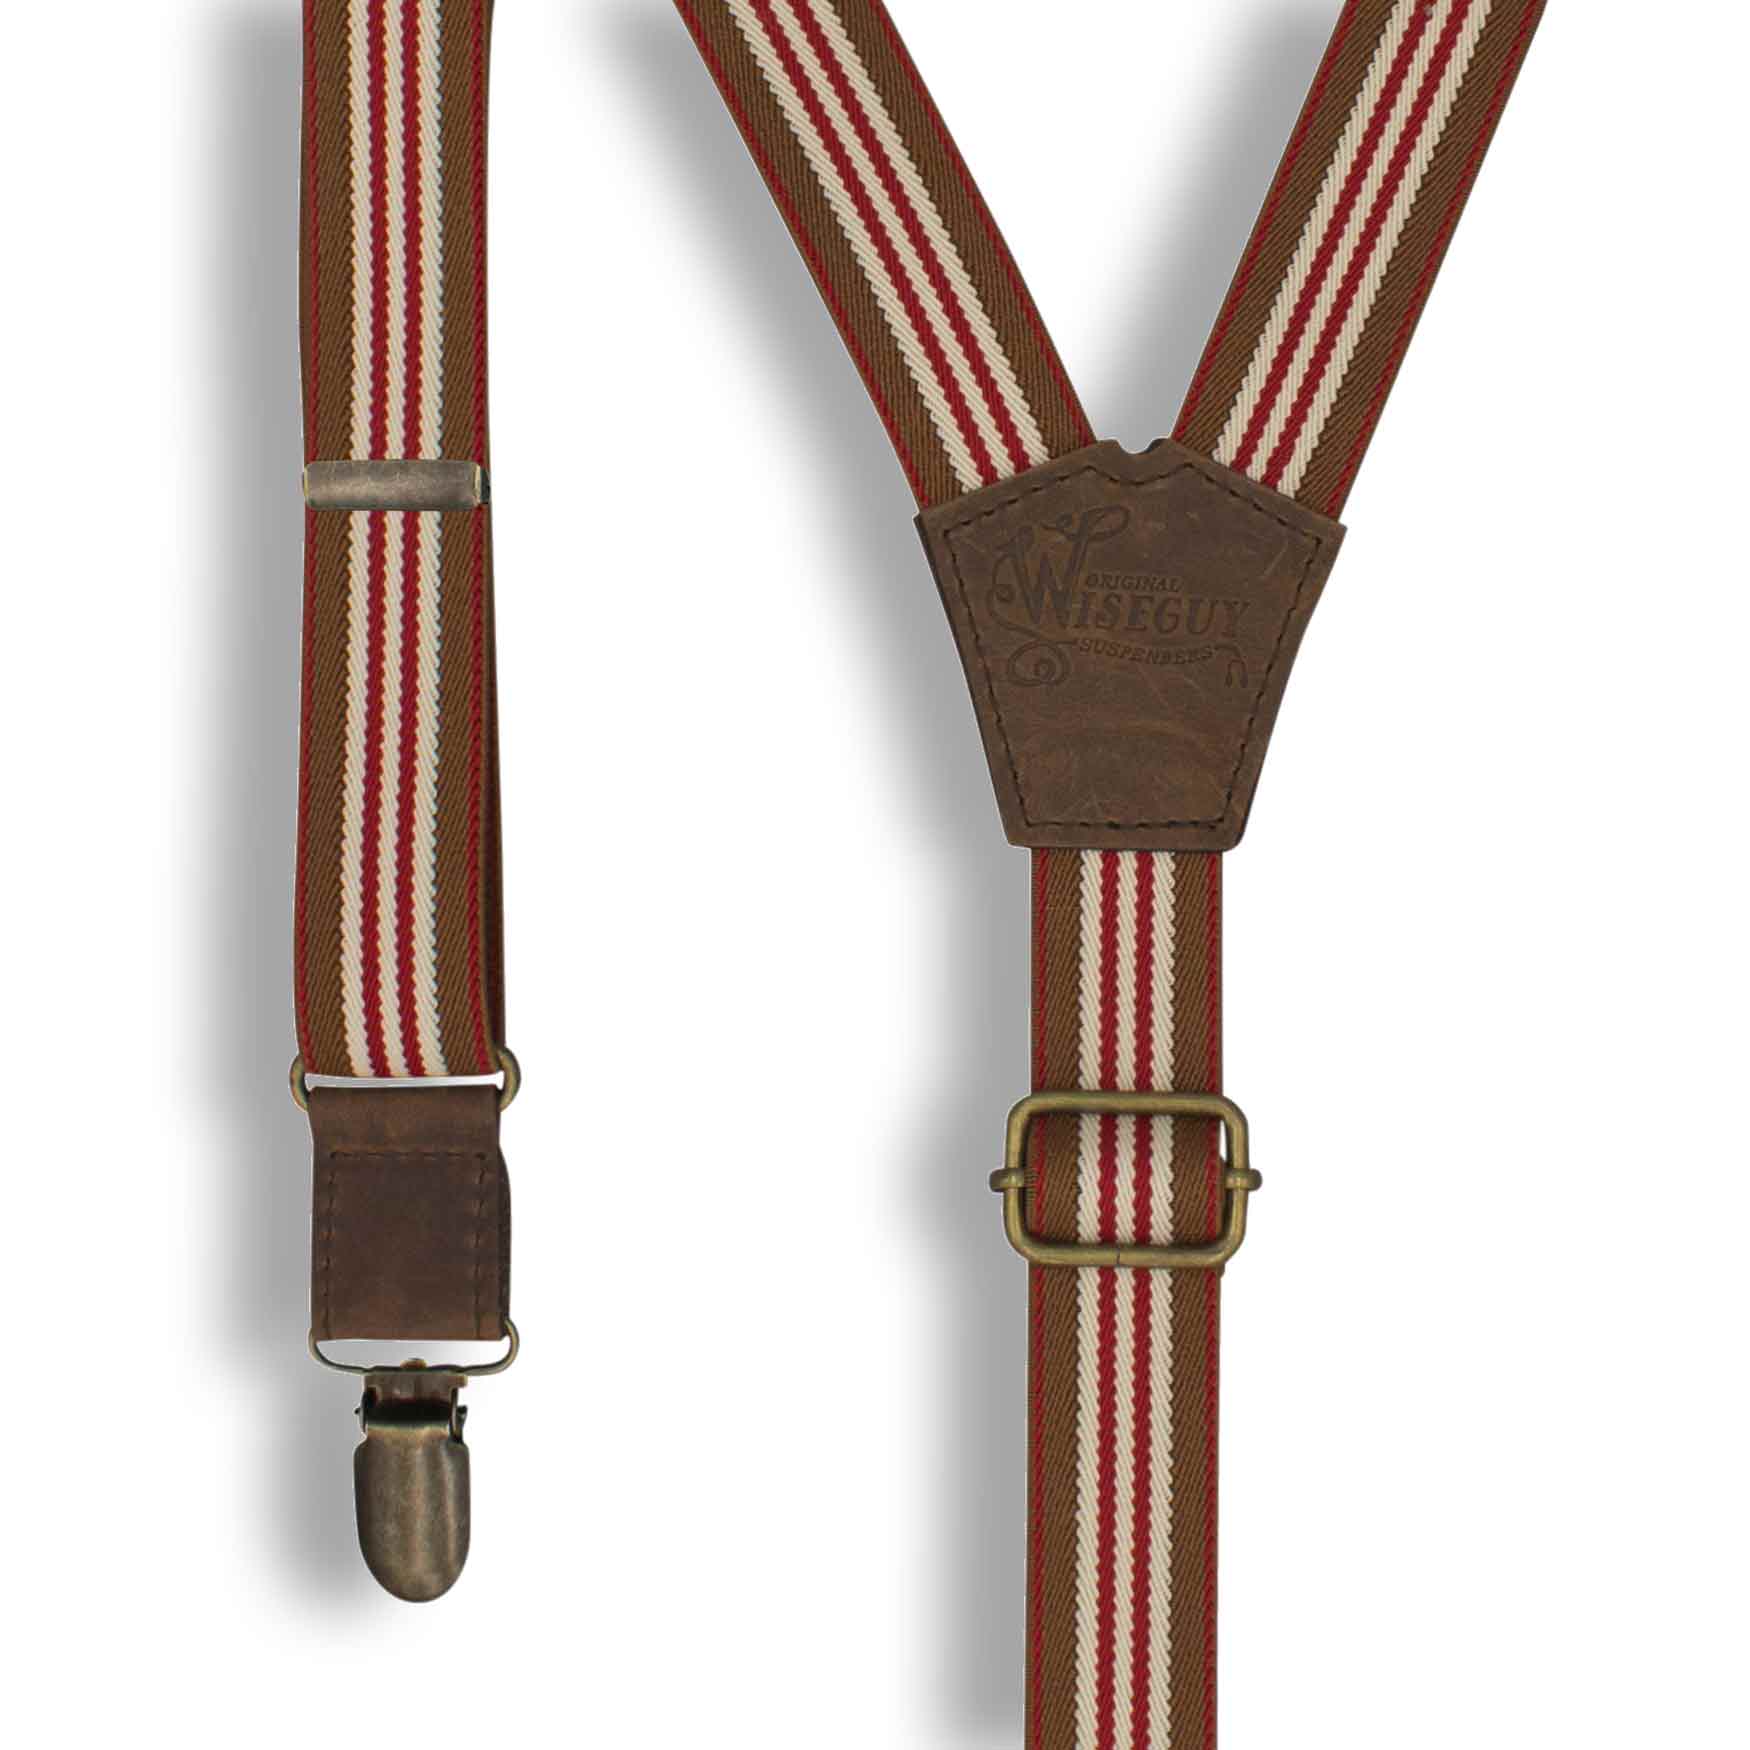 The Monaco Racing Suspenders slim straps (1 inch/2.54 cm) - Wiseguy Suspenders